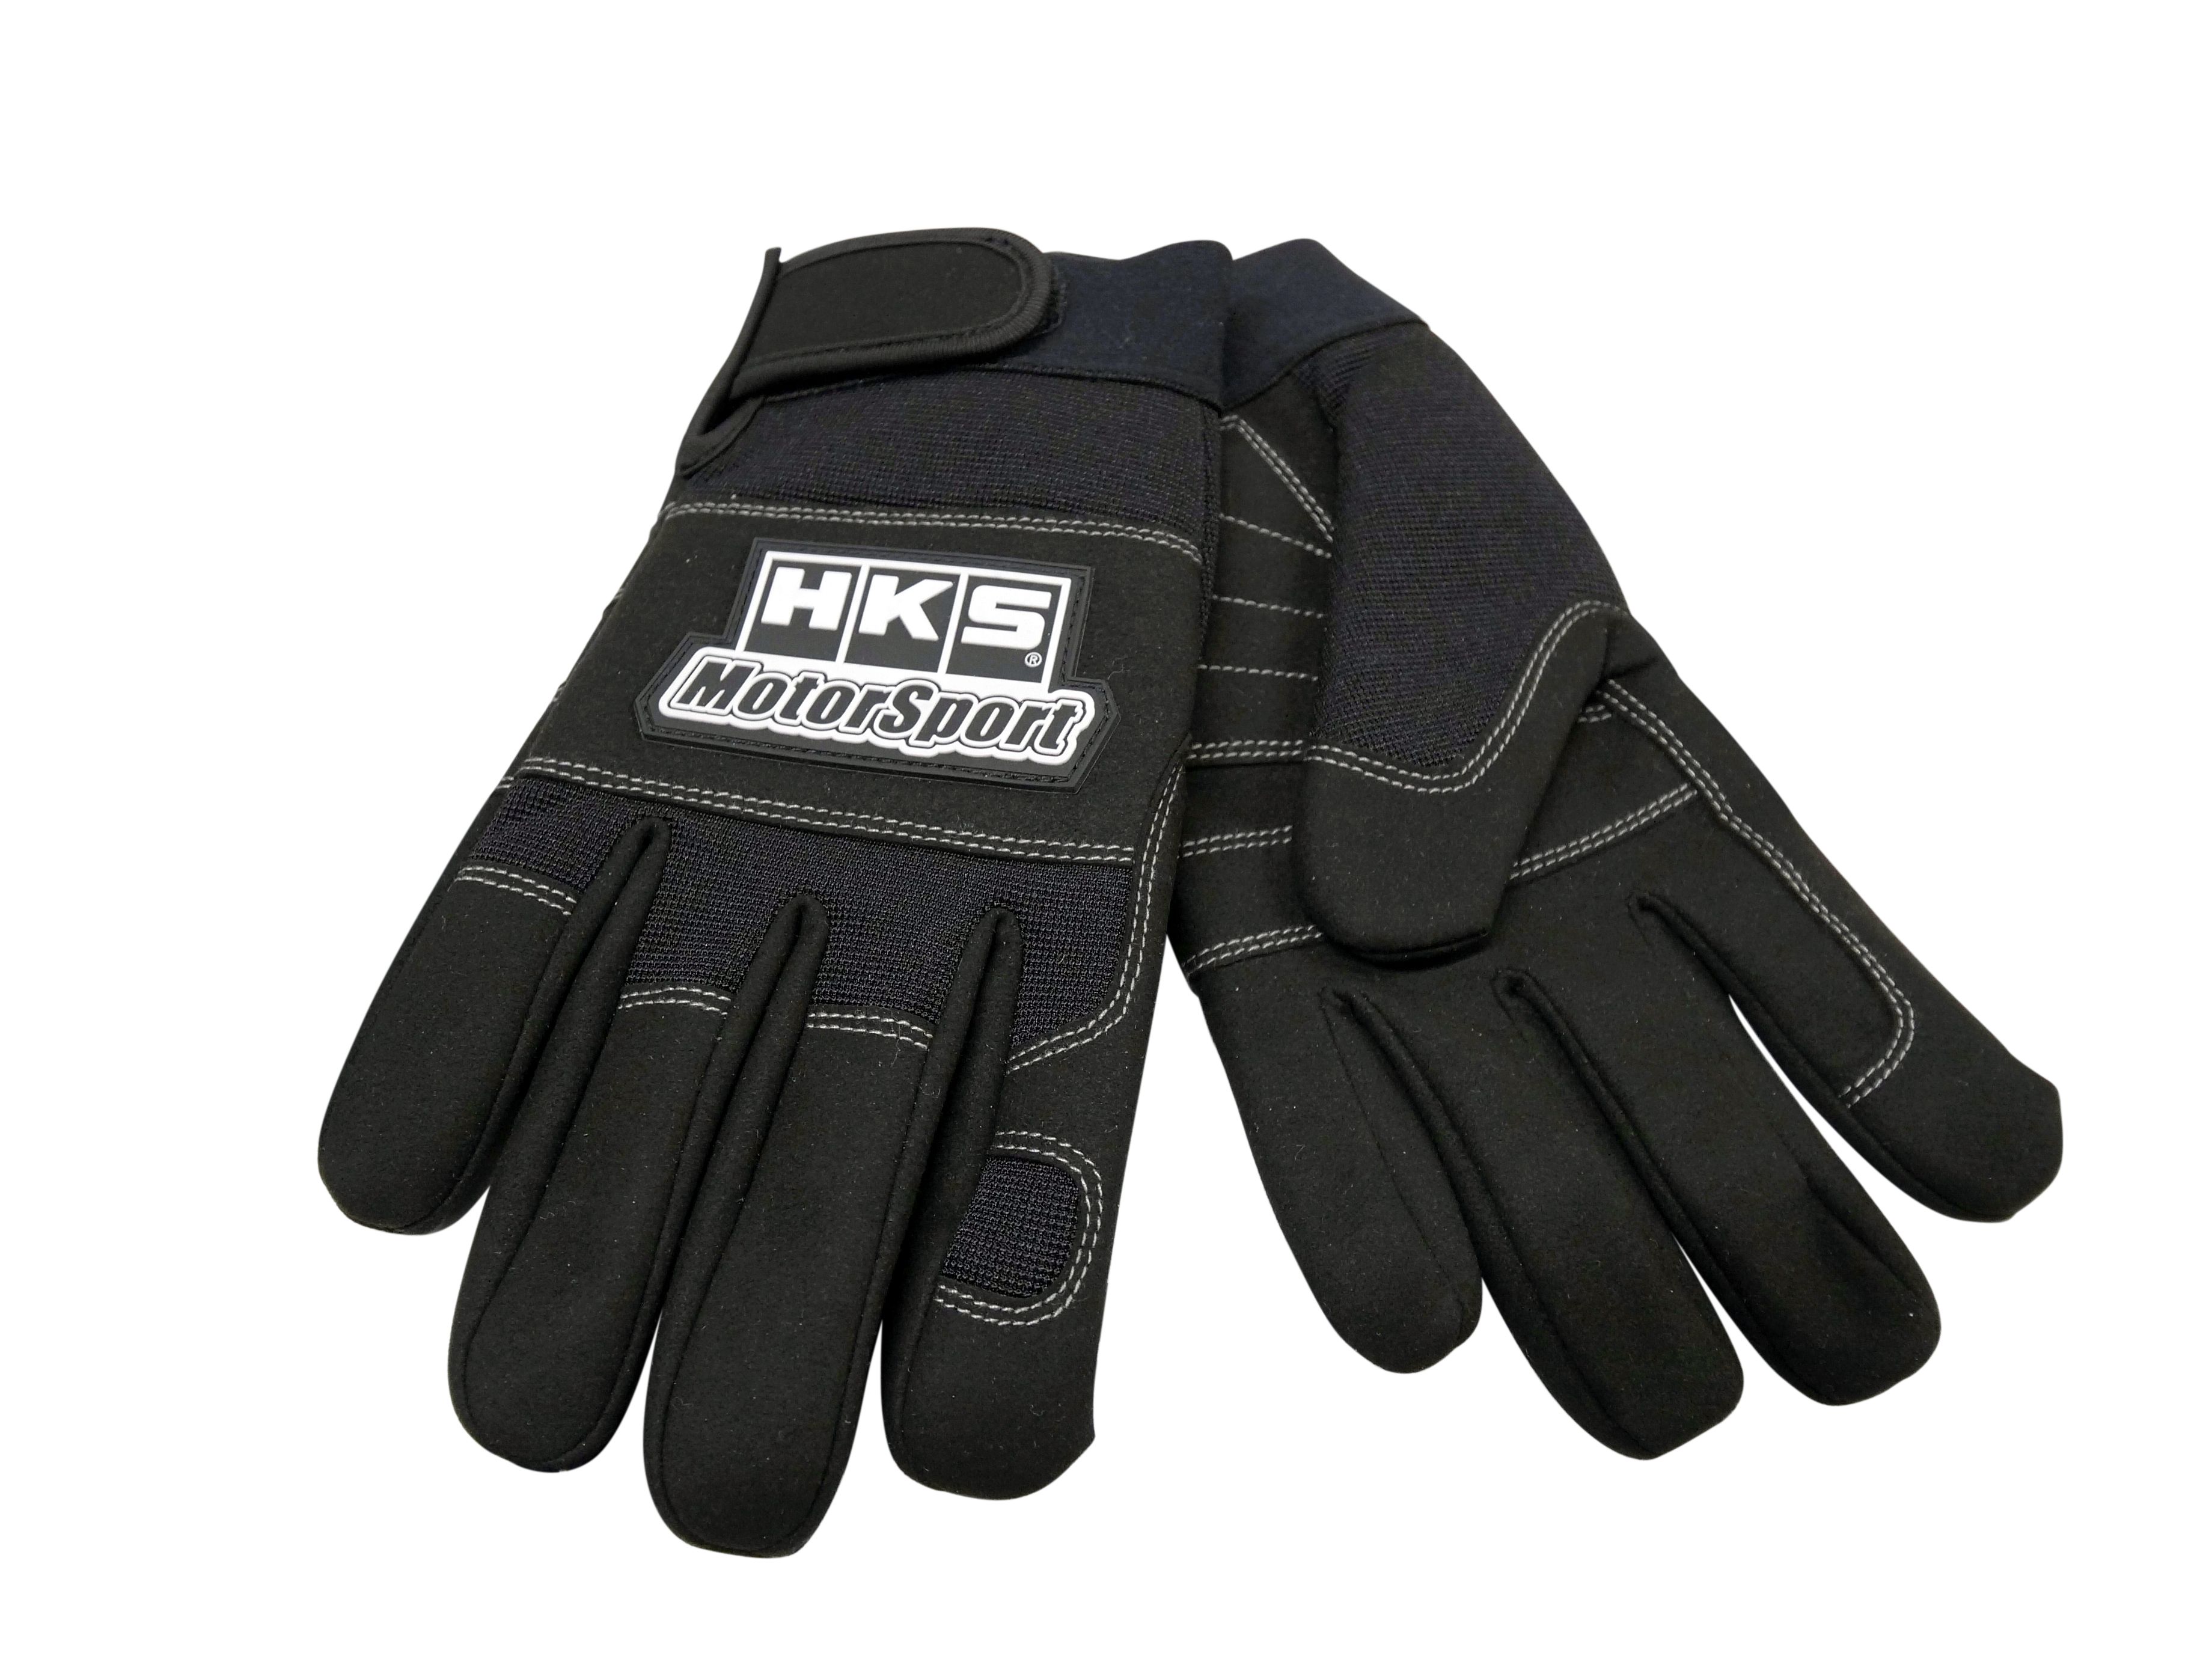 HKS Mechanic Gloves - Limited Edition!